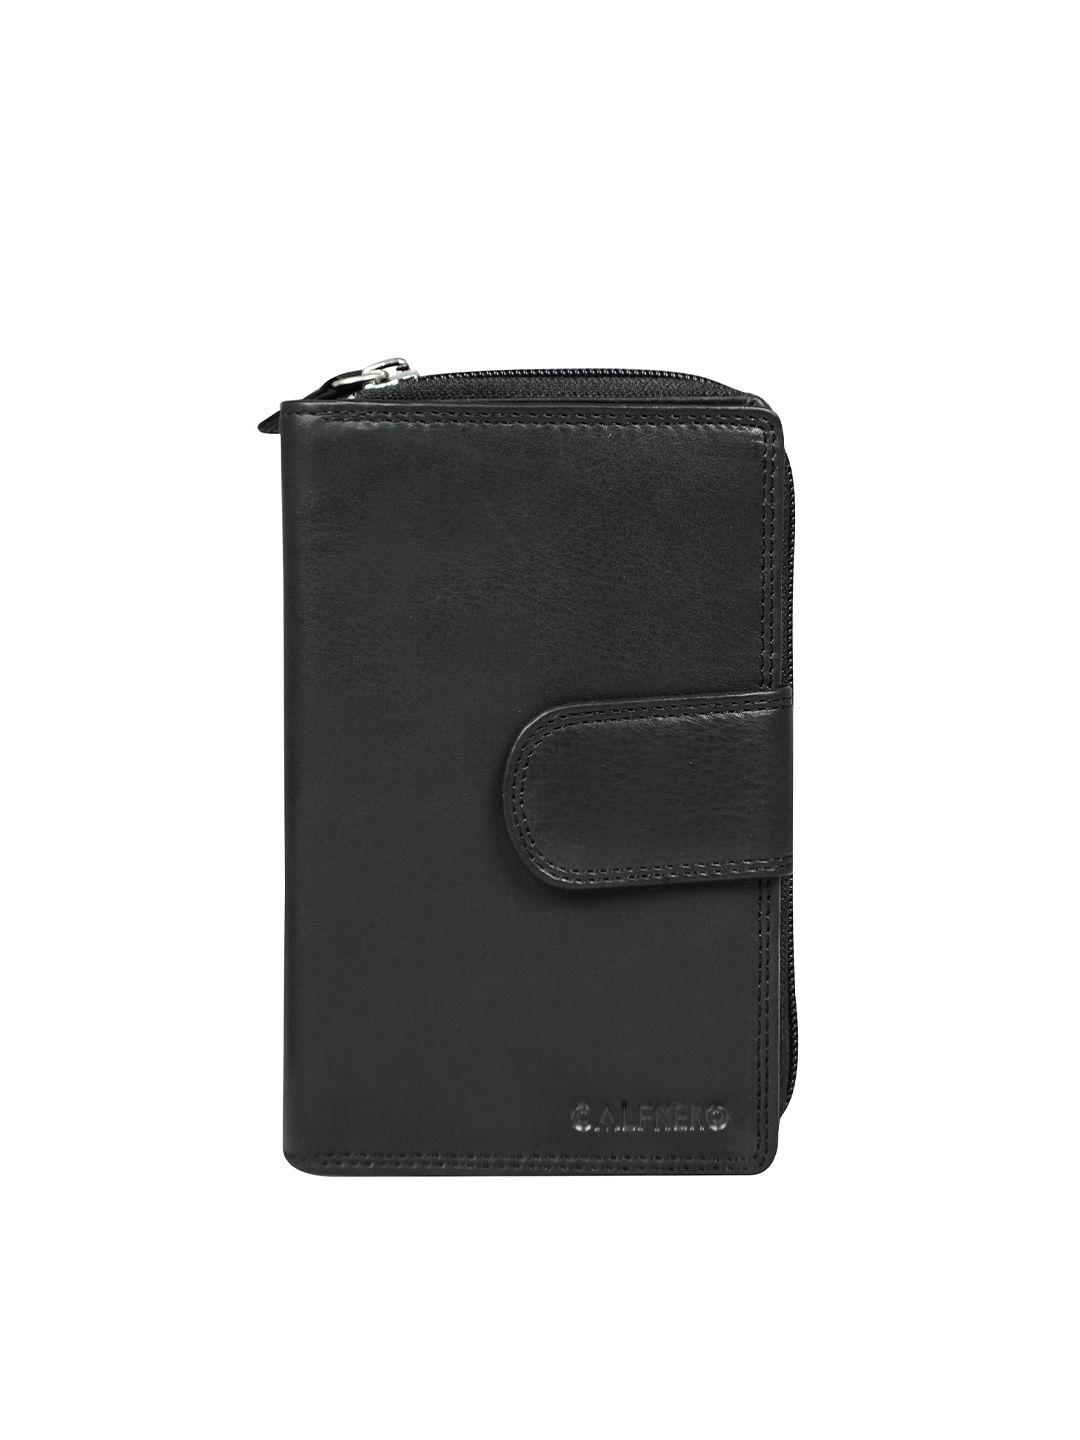 calfnero women black leather two fold wallet